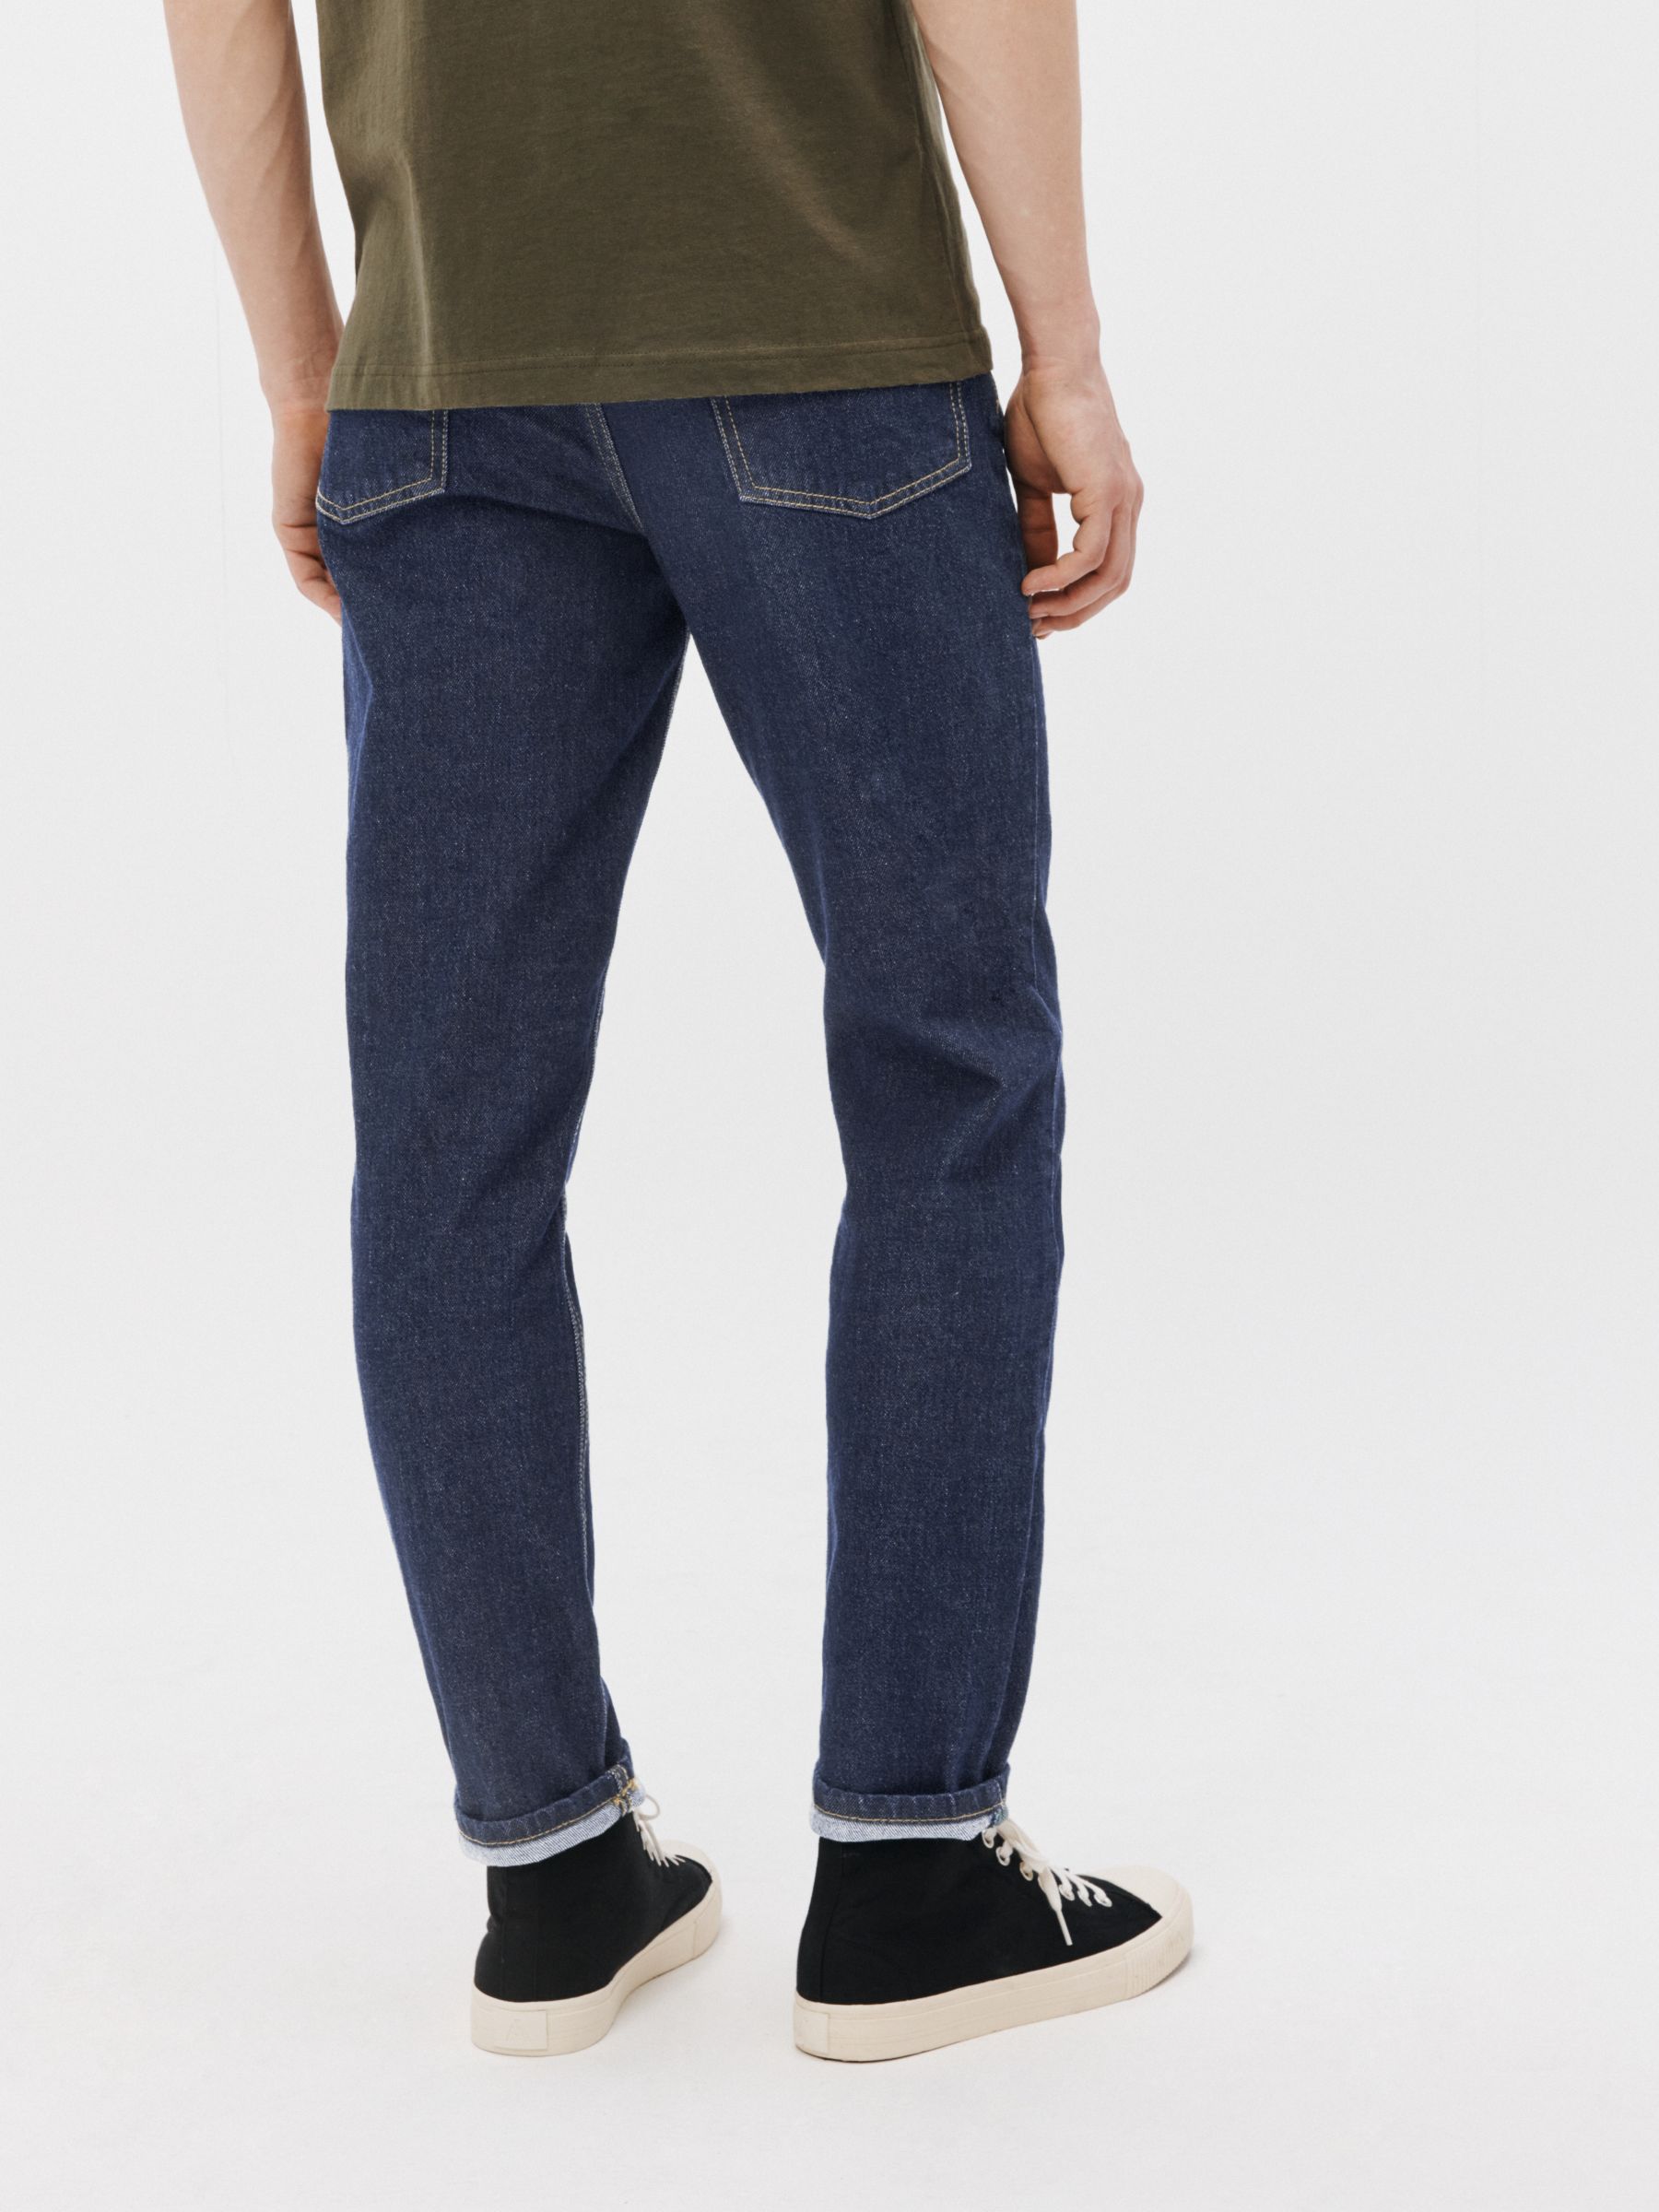 Buy Skiie Street Skinny Fit Navy Blue Denim Jeans For Women Online